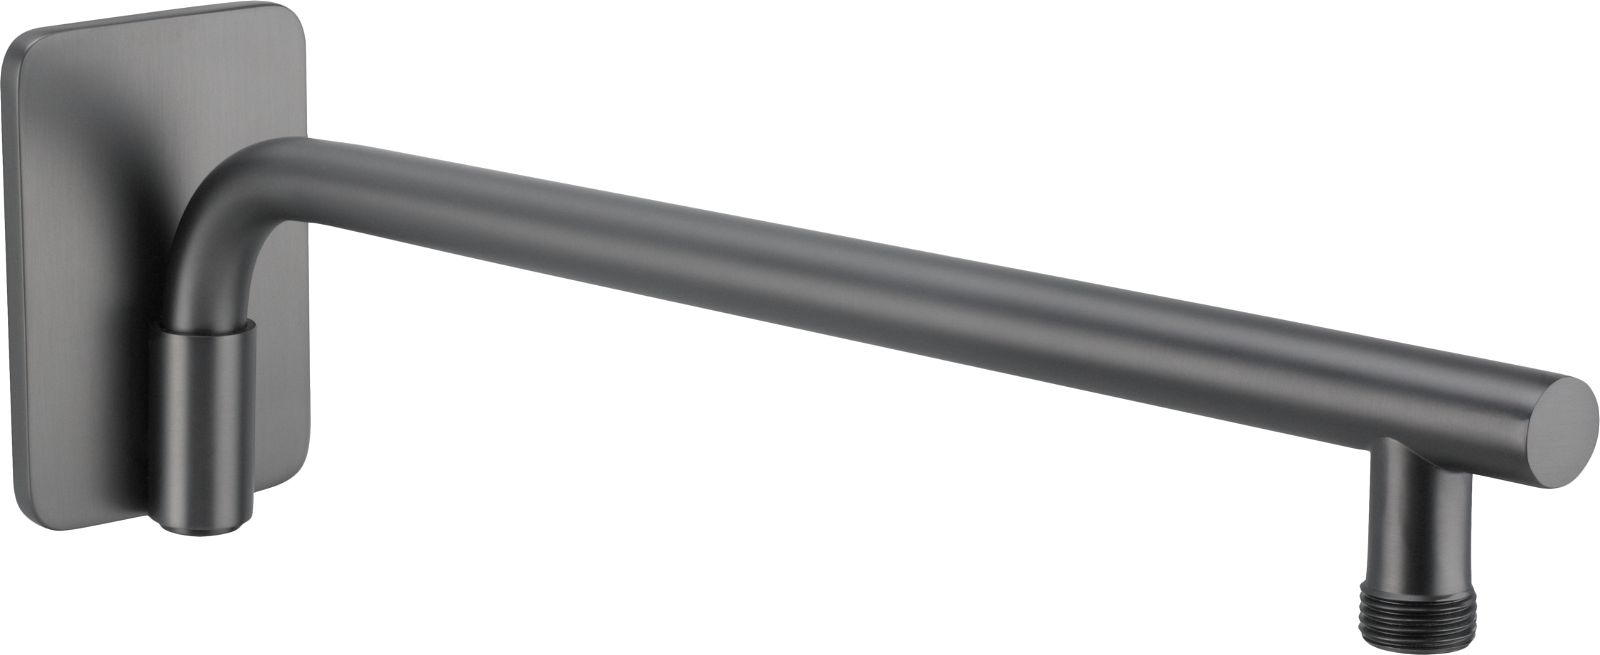 Shower spout, wall-mounted, moveable - 400 mm - NAC_D40K - Główne zdjęcie produktowe